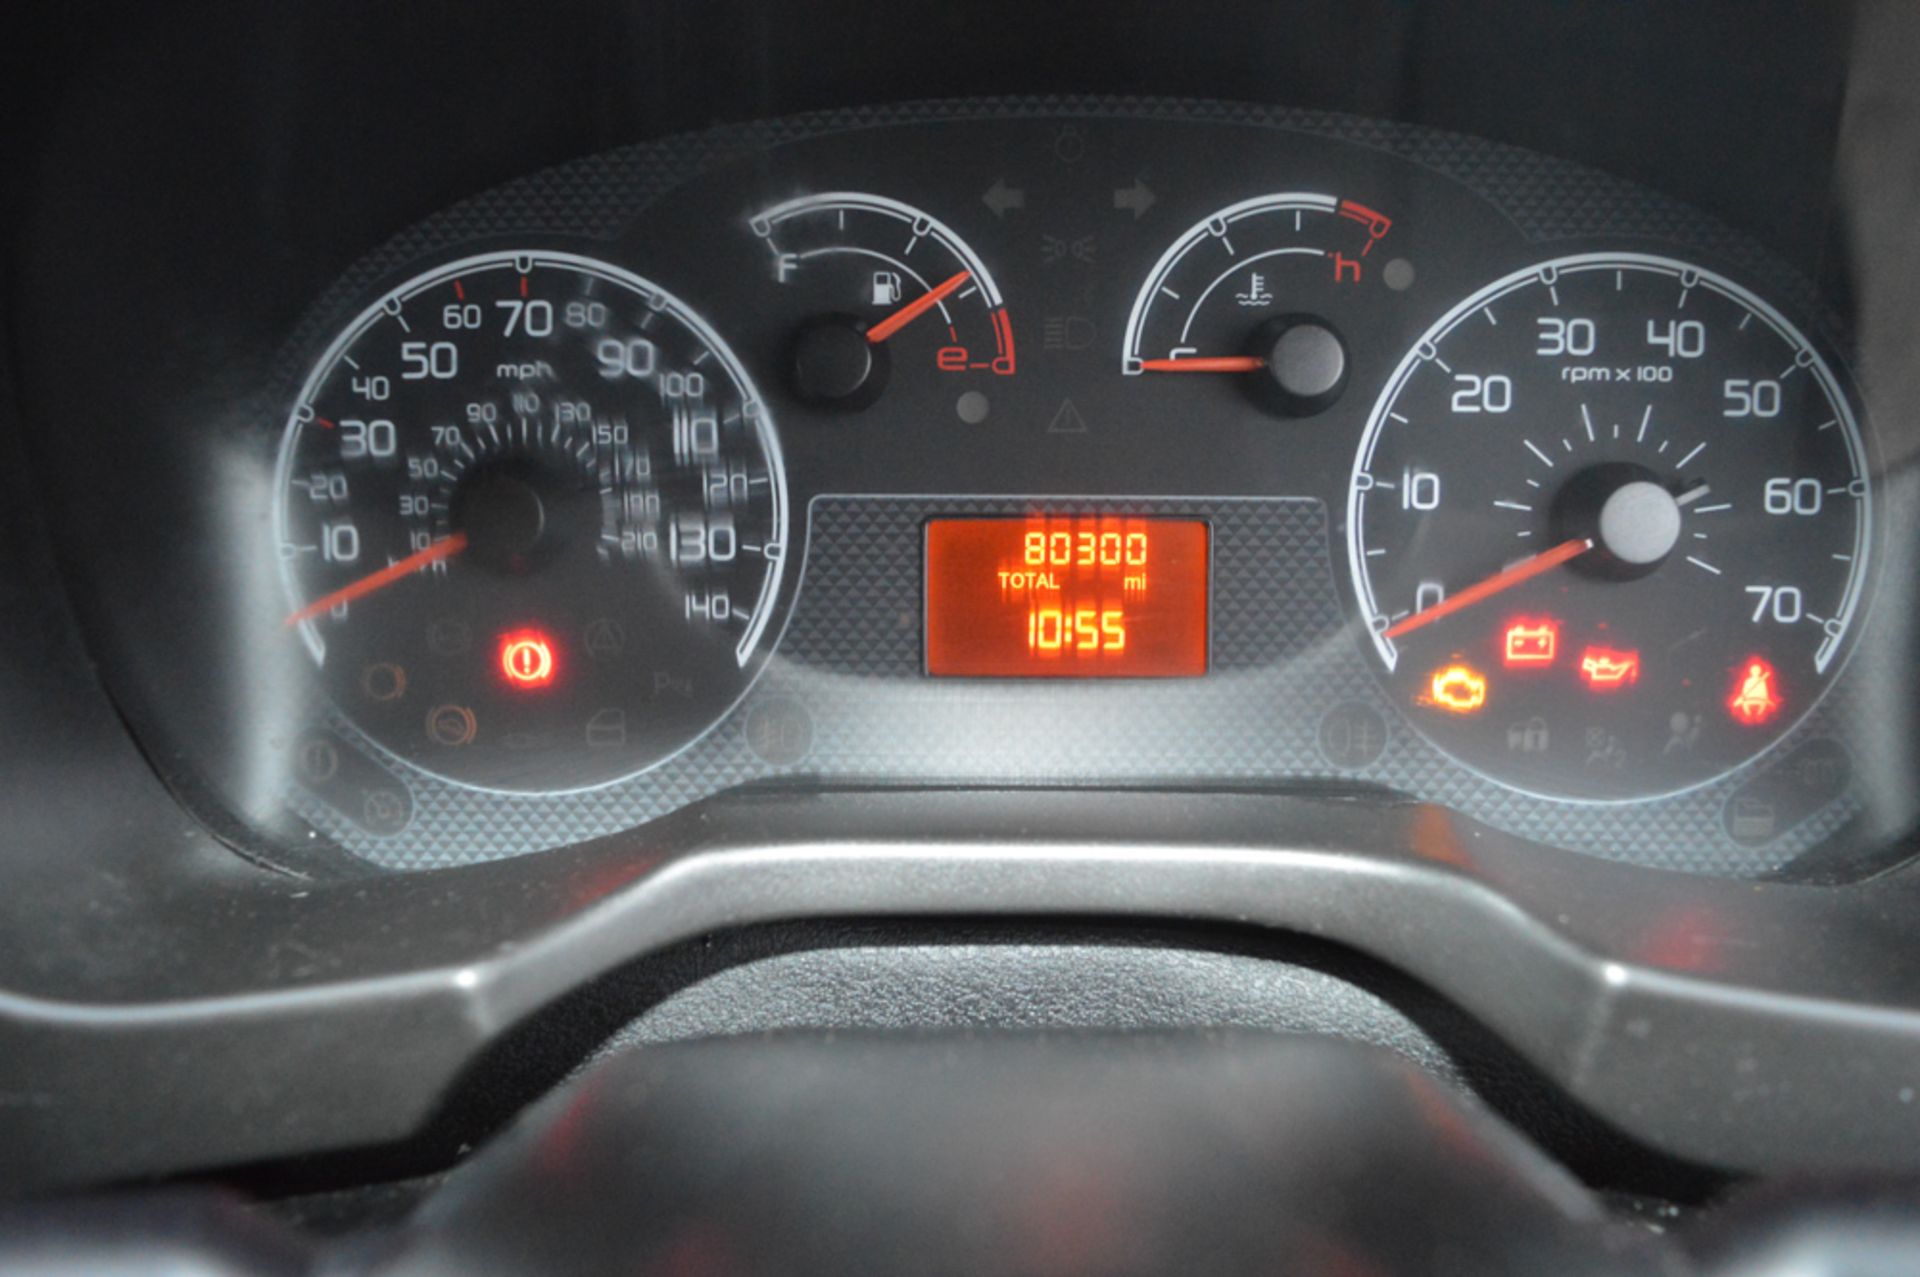 Peugeot Bipper 1.4 S HDi diesel panel van Registration Number: OV60 VKW Date of Registration: 08/ - Image 9 of 9